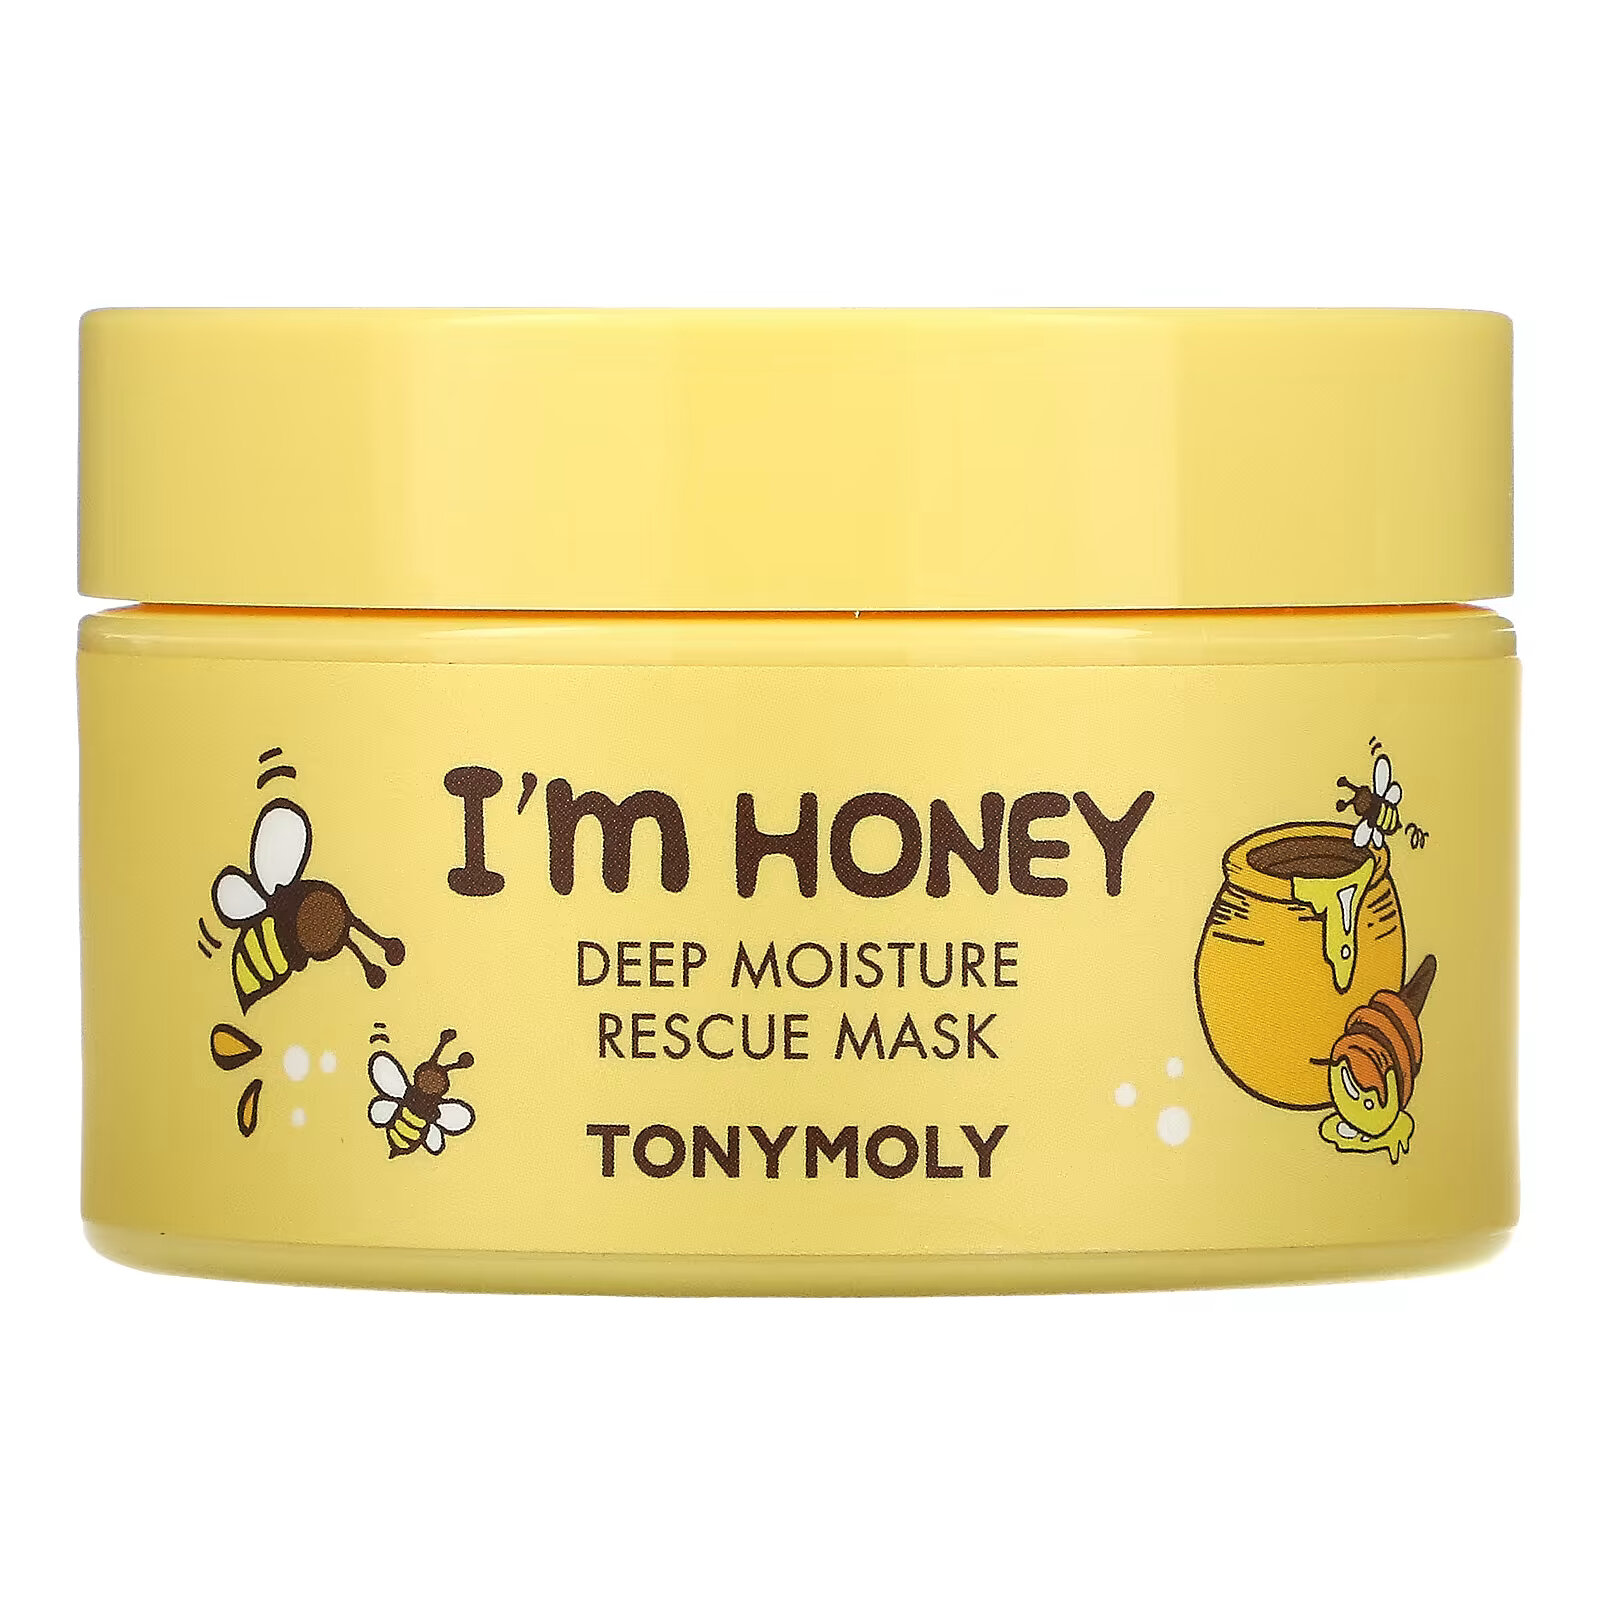 Tony Moly, I'm Honey, восстанавливающая маска для глубокого увлажнения, 100 г (3,52 унции) tony moly i m honey восстанавливающая маска для глубокого увлажнения 100 г 3 52 унции